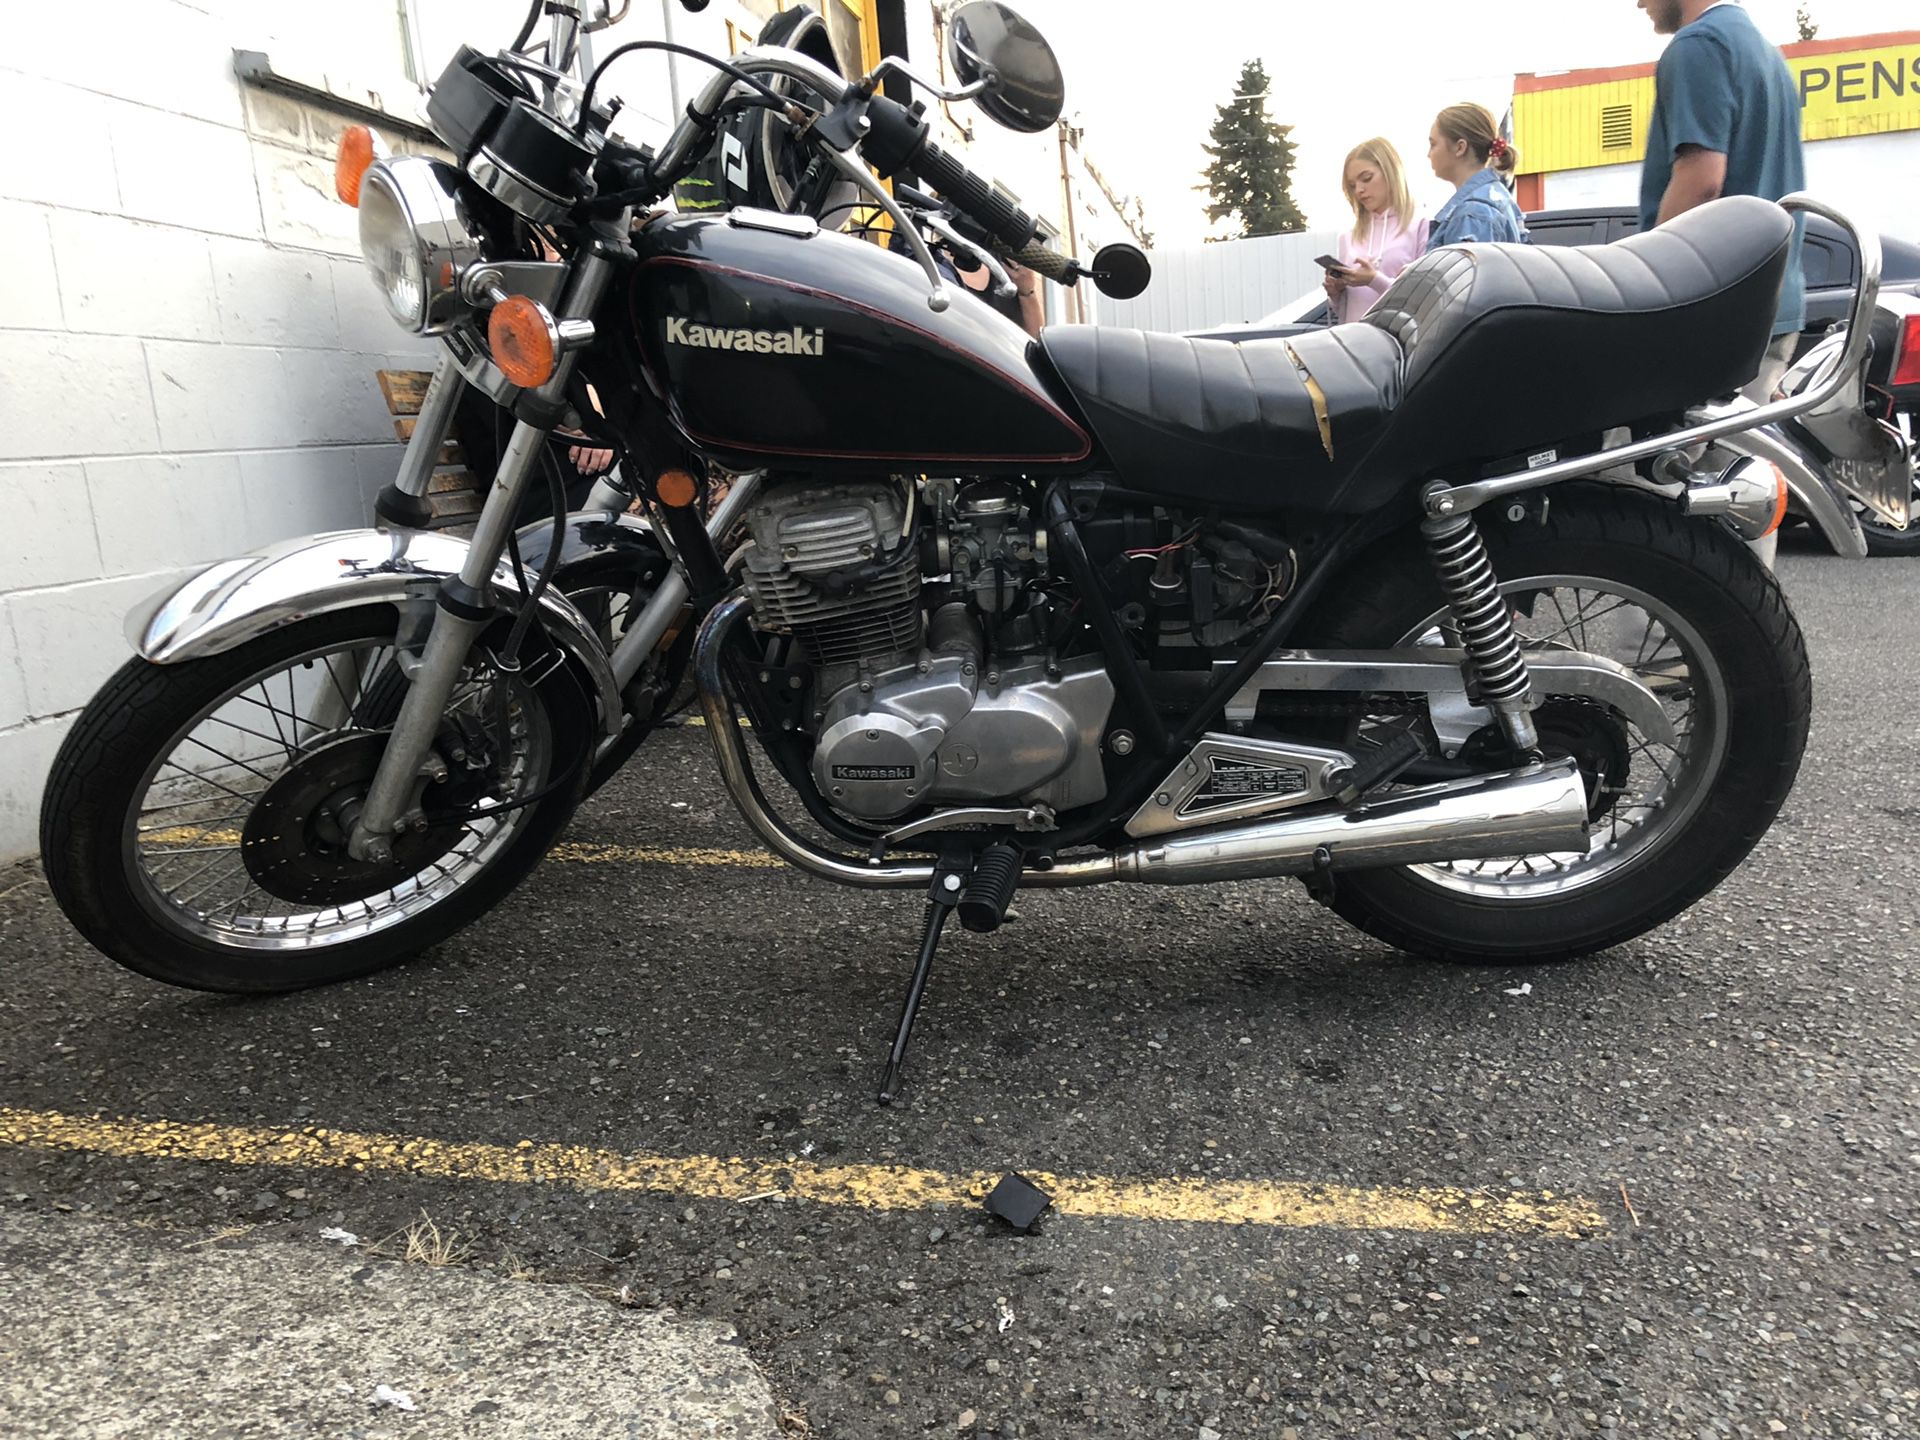 1981 Kawasaki 305 CSR motorcycle